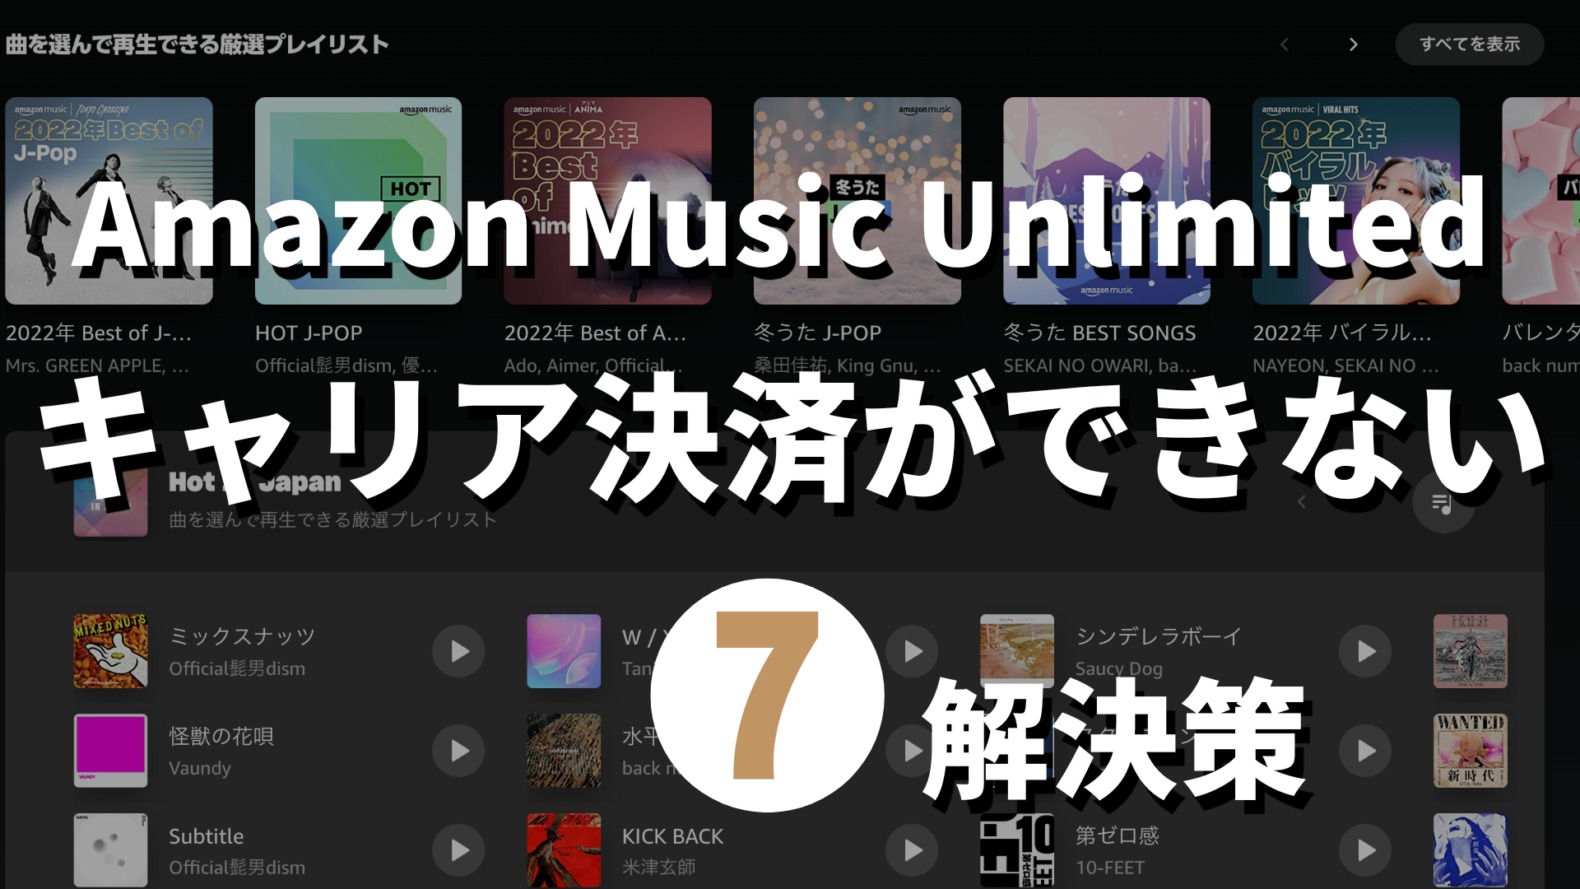 Amazon Music Unlimitedキャリア決済ができない解決策記事のサムネイル画像